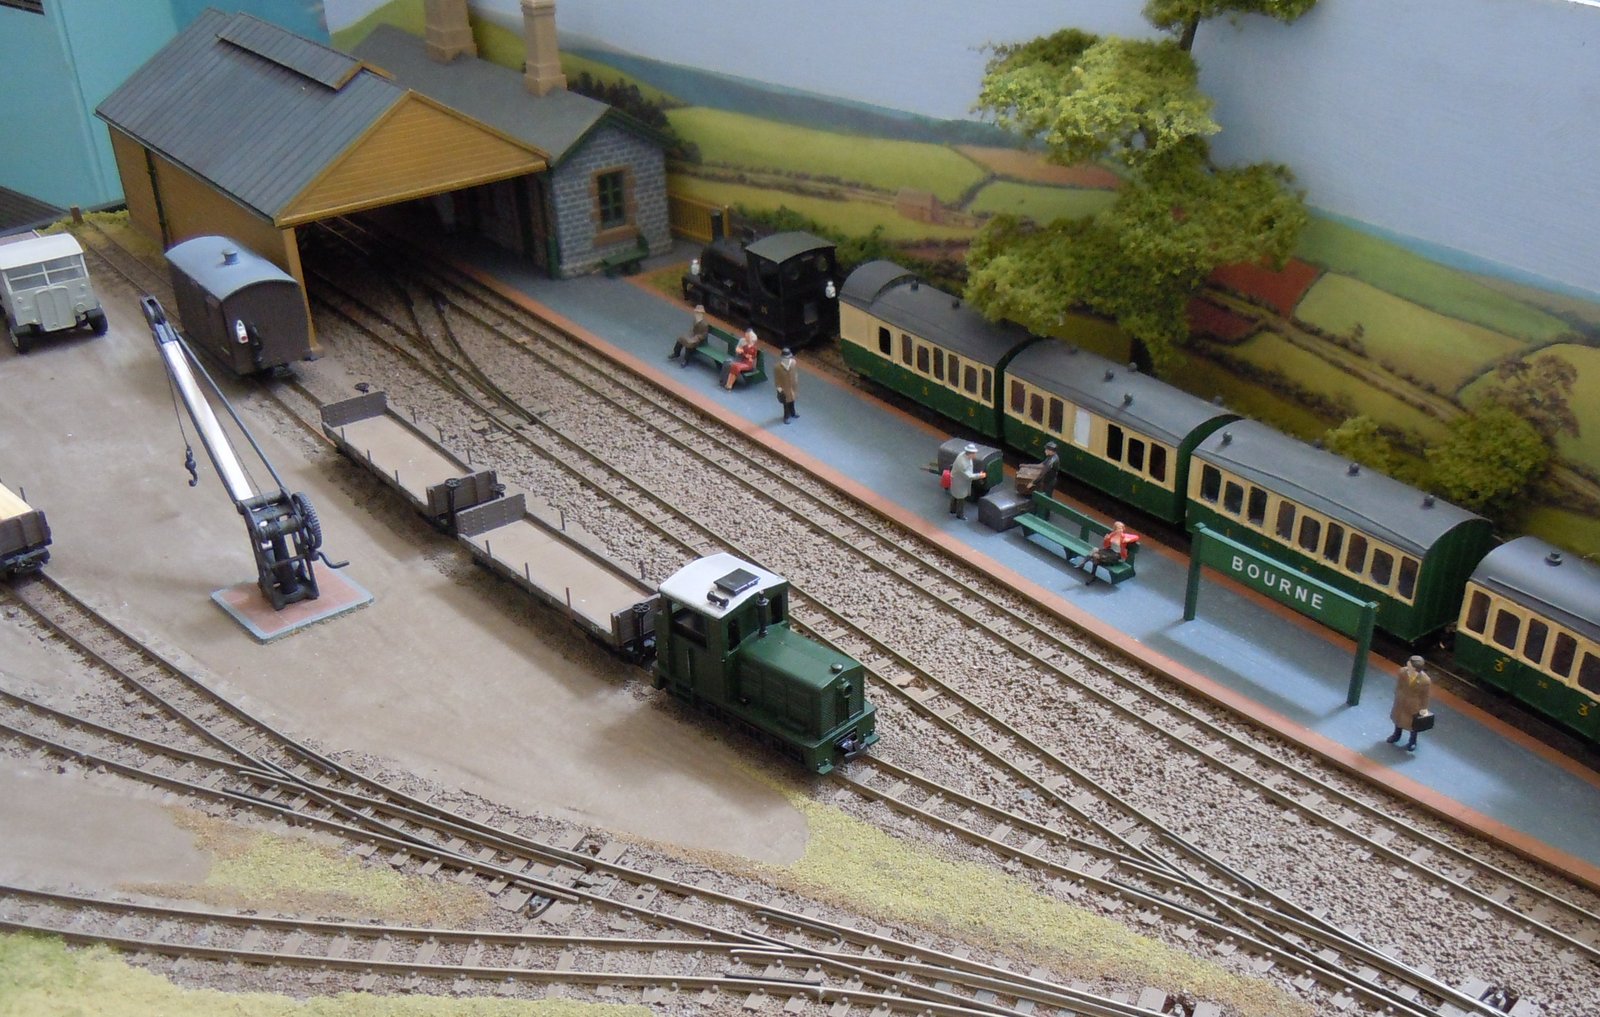 Michael's Model Railways: Shoreham Show